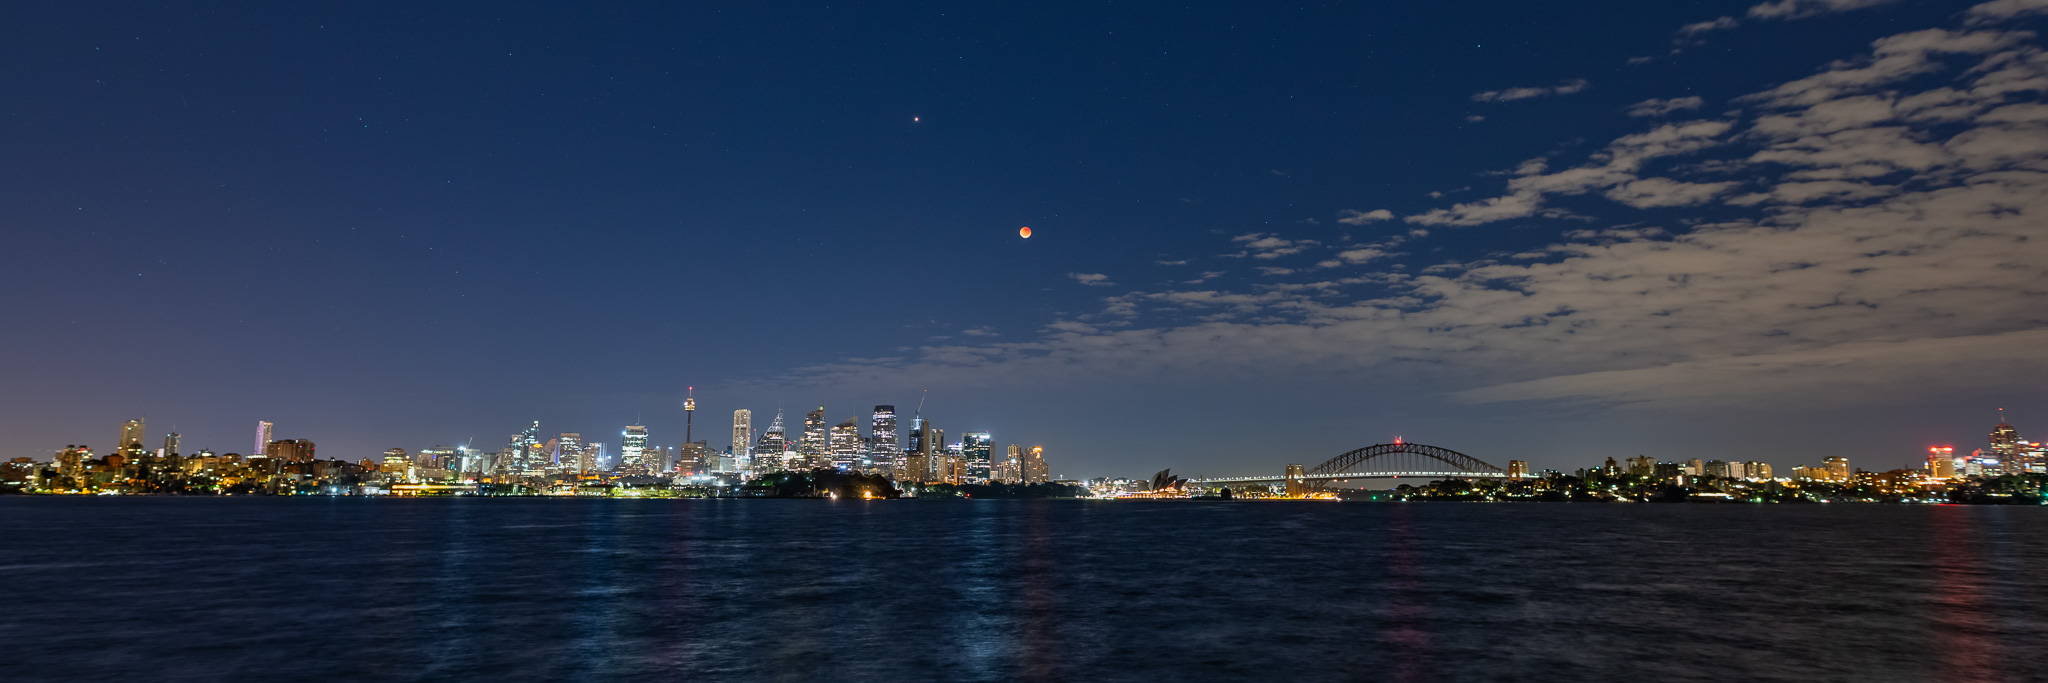 Lunar Eclipse Blood Moon Sydney Harbour 28 July 2018